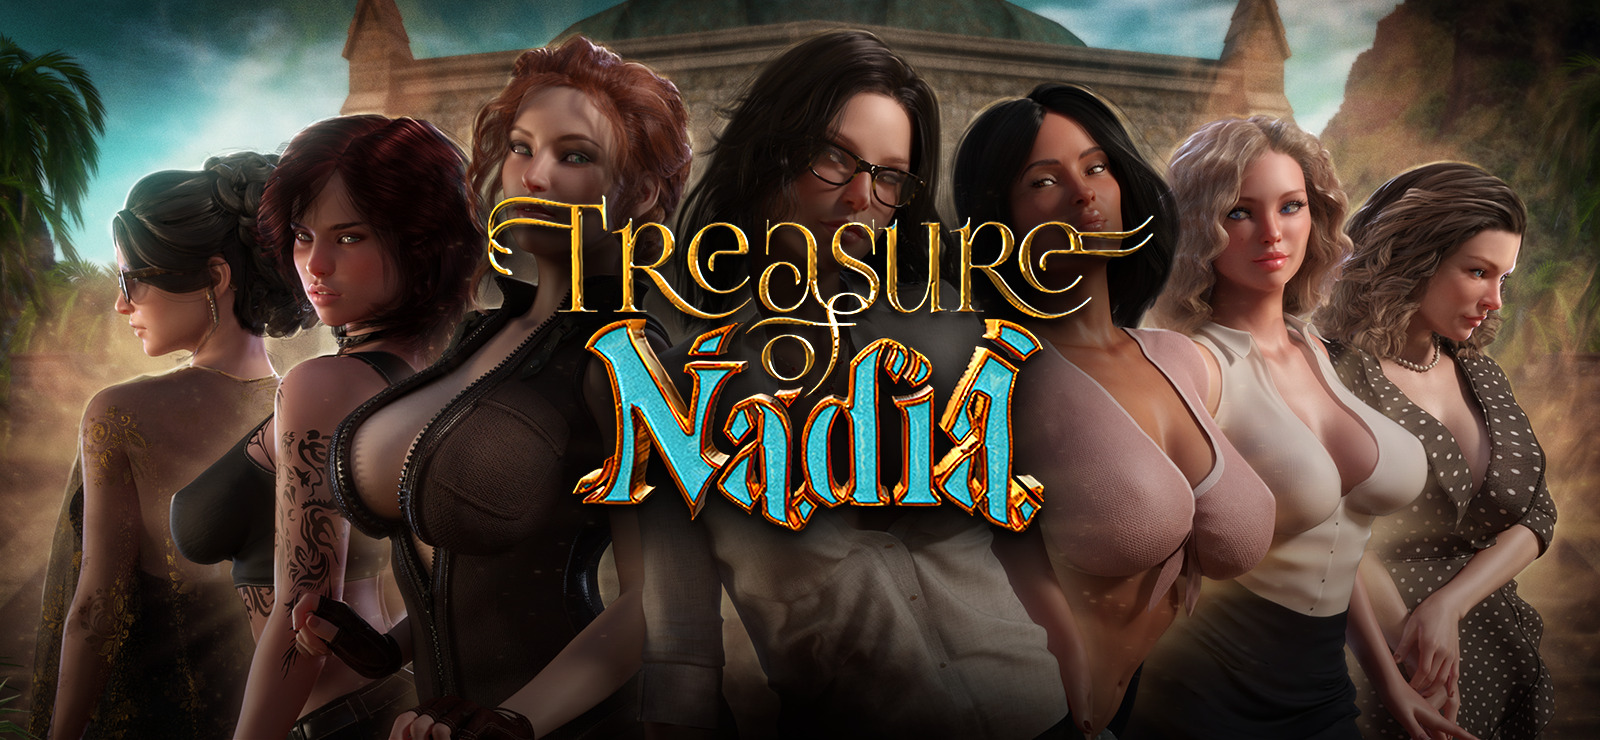 Buy treasure of nadia